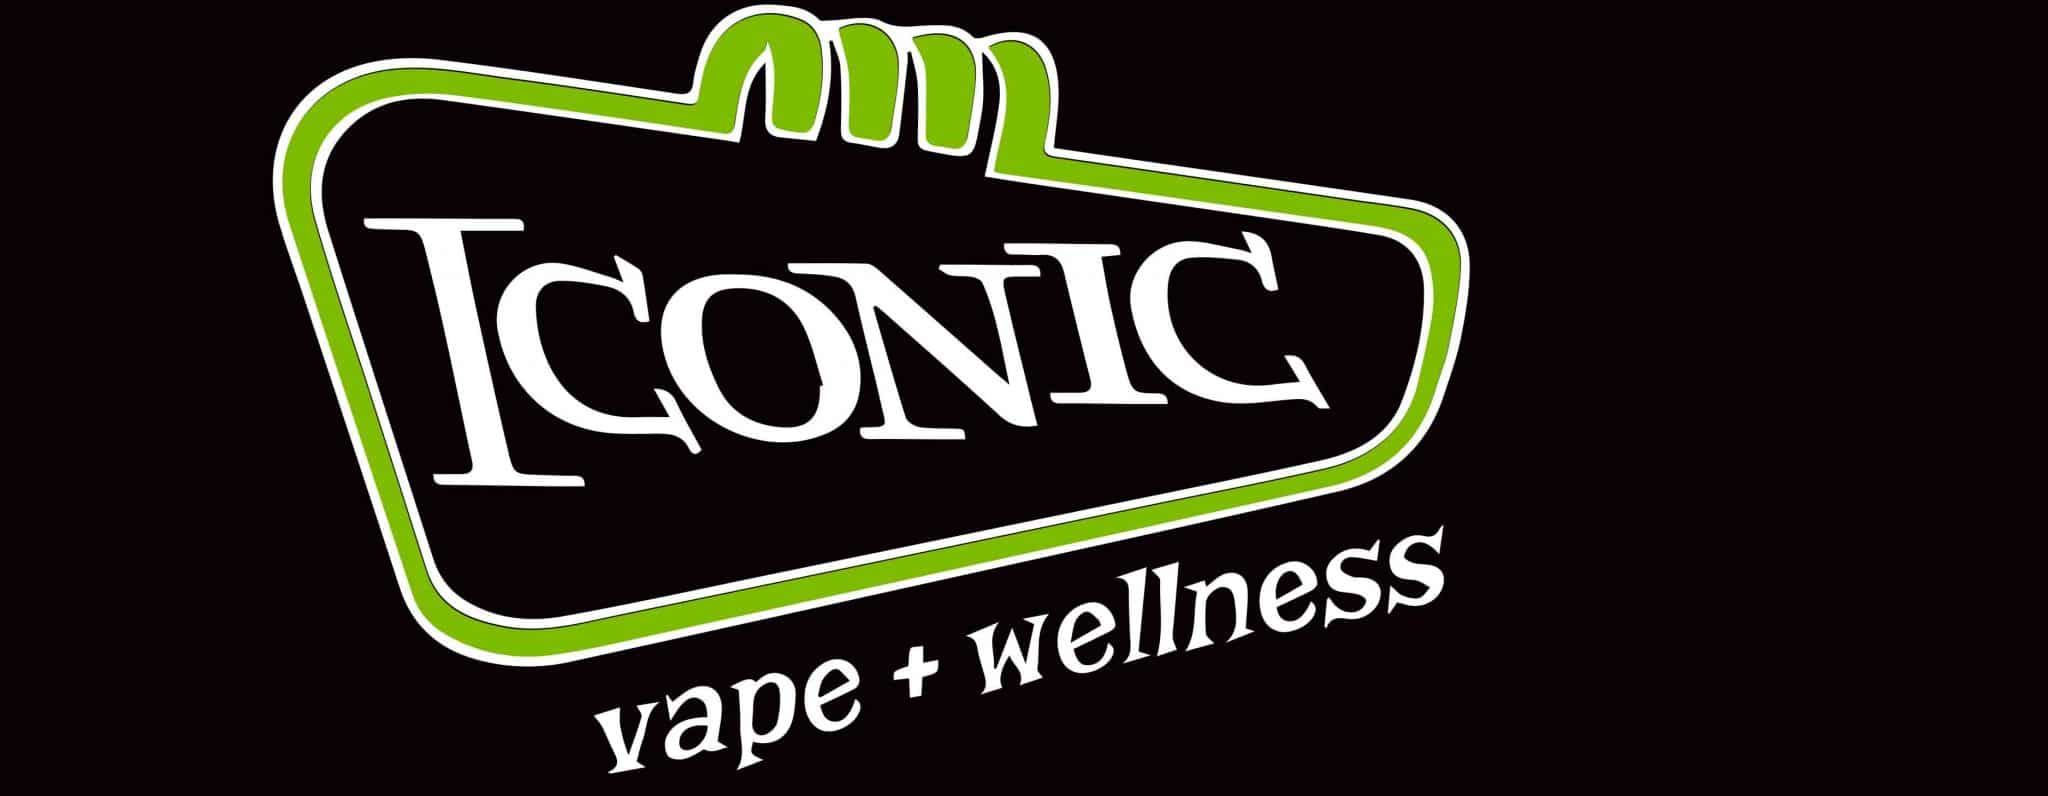 iconic-vape-&-wellness